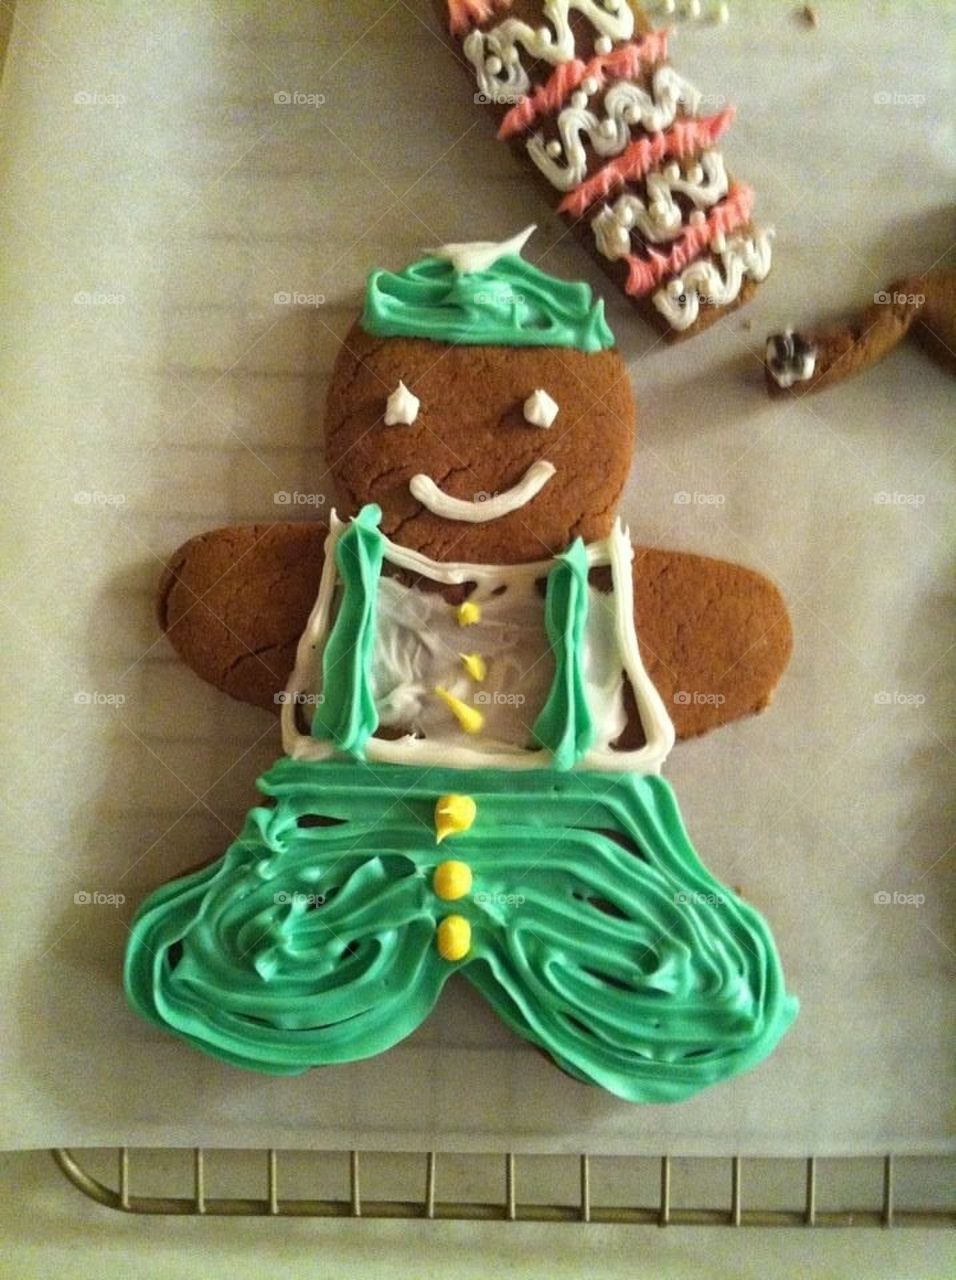 Lederhosen Gingerbread Man